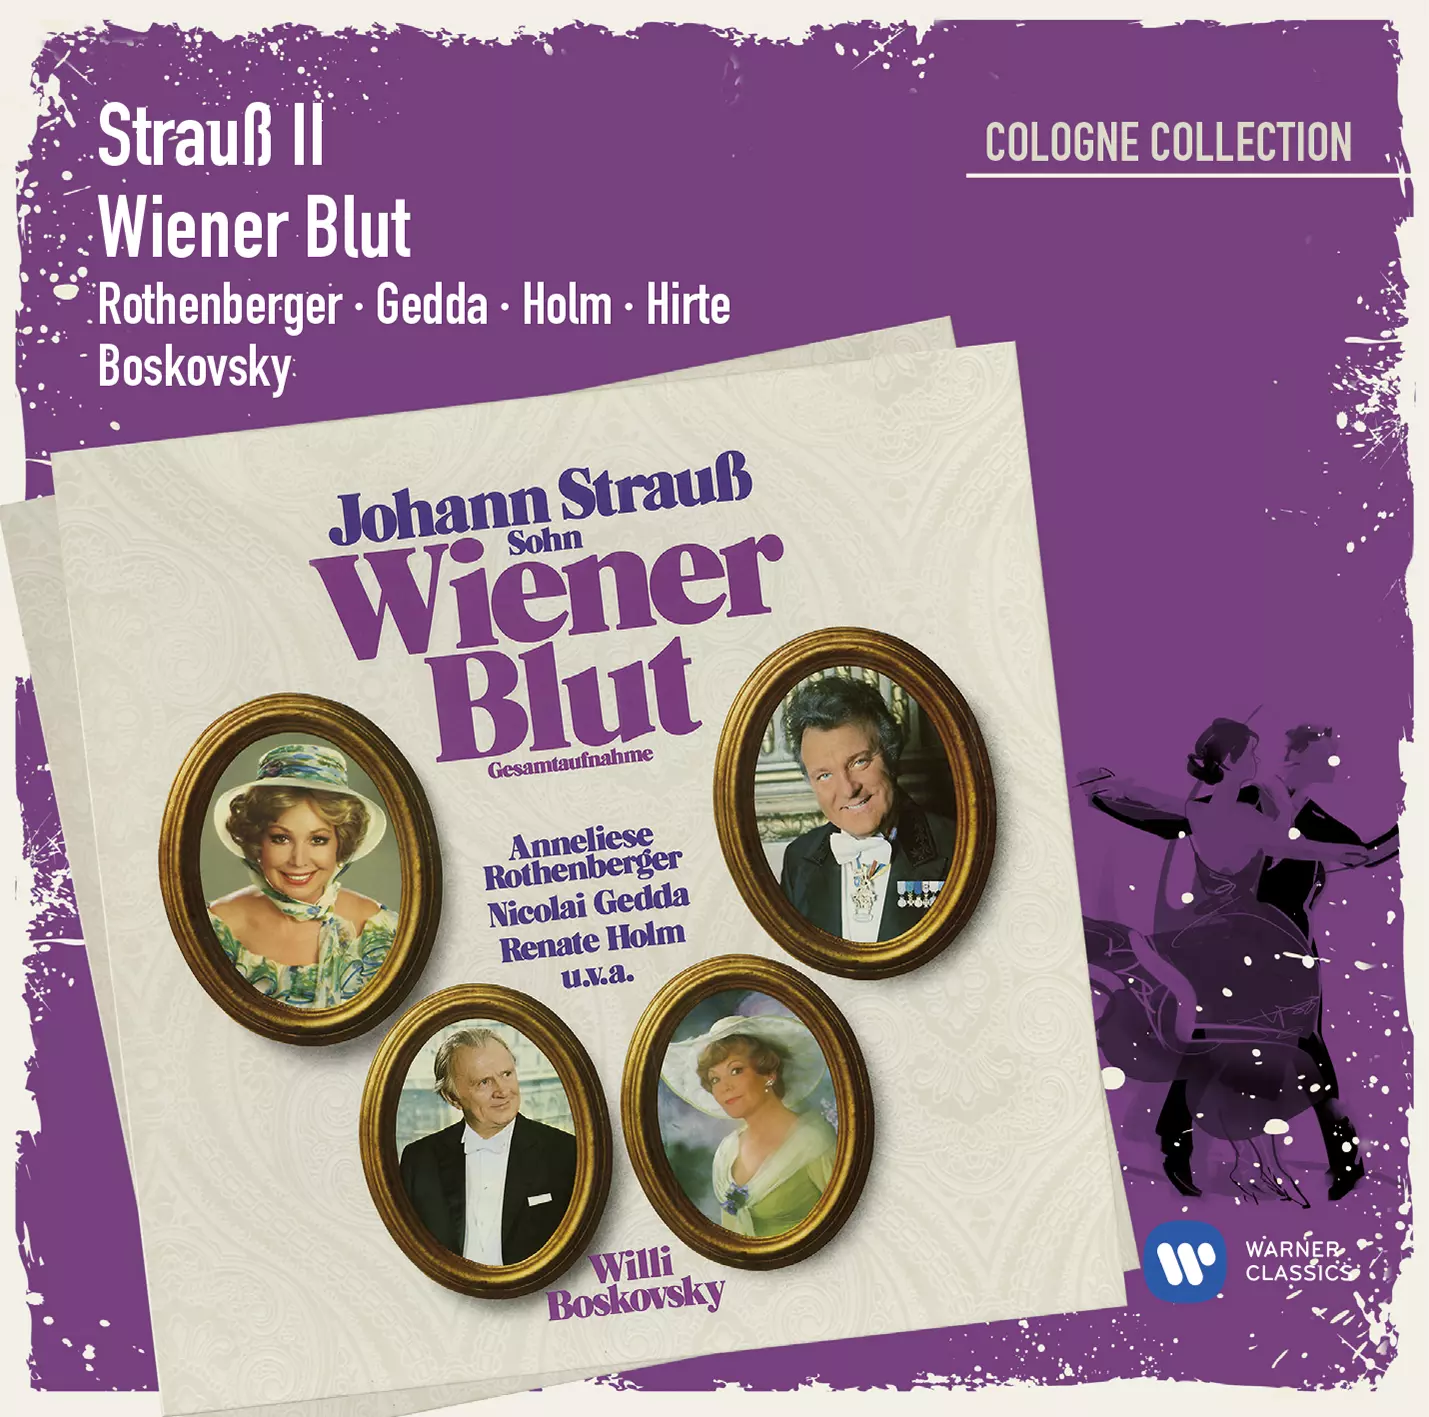 Johann Strauss II: Wiener Blut (Cologne Collection)